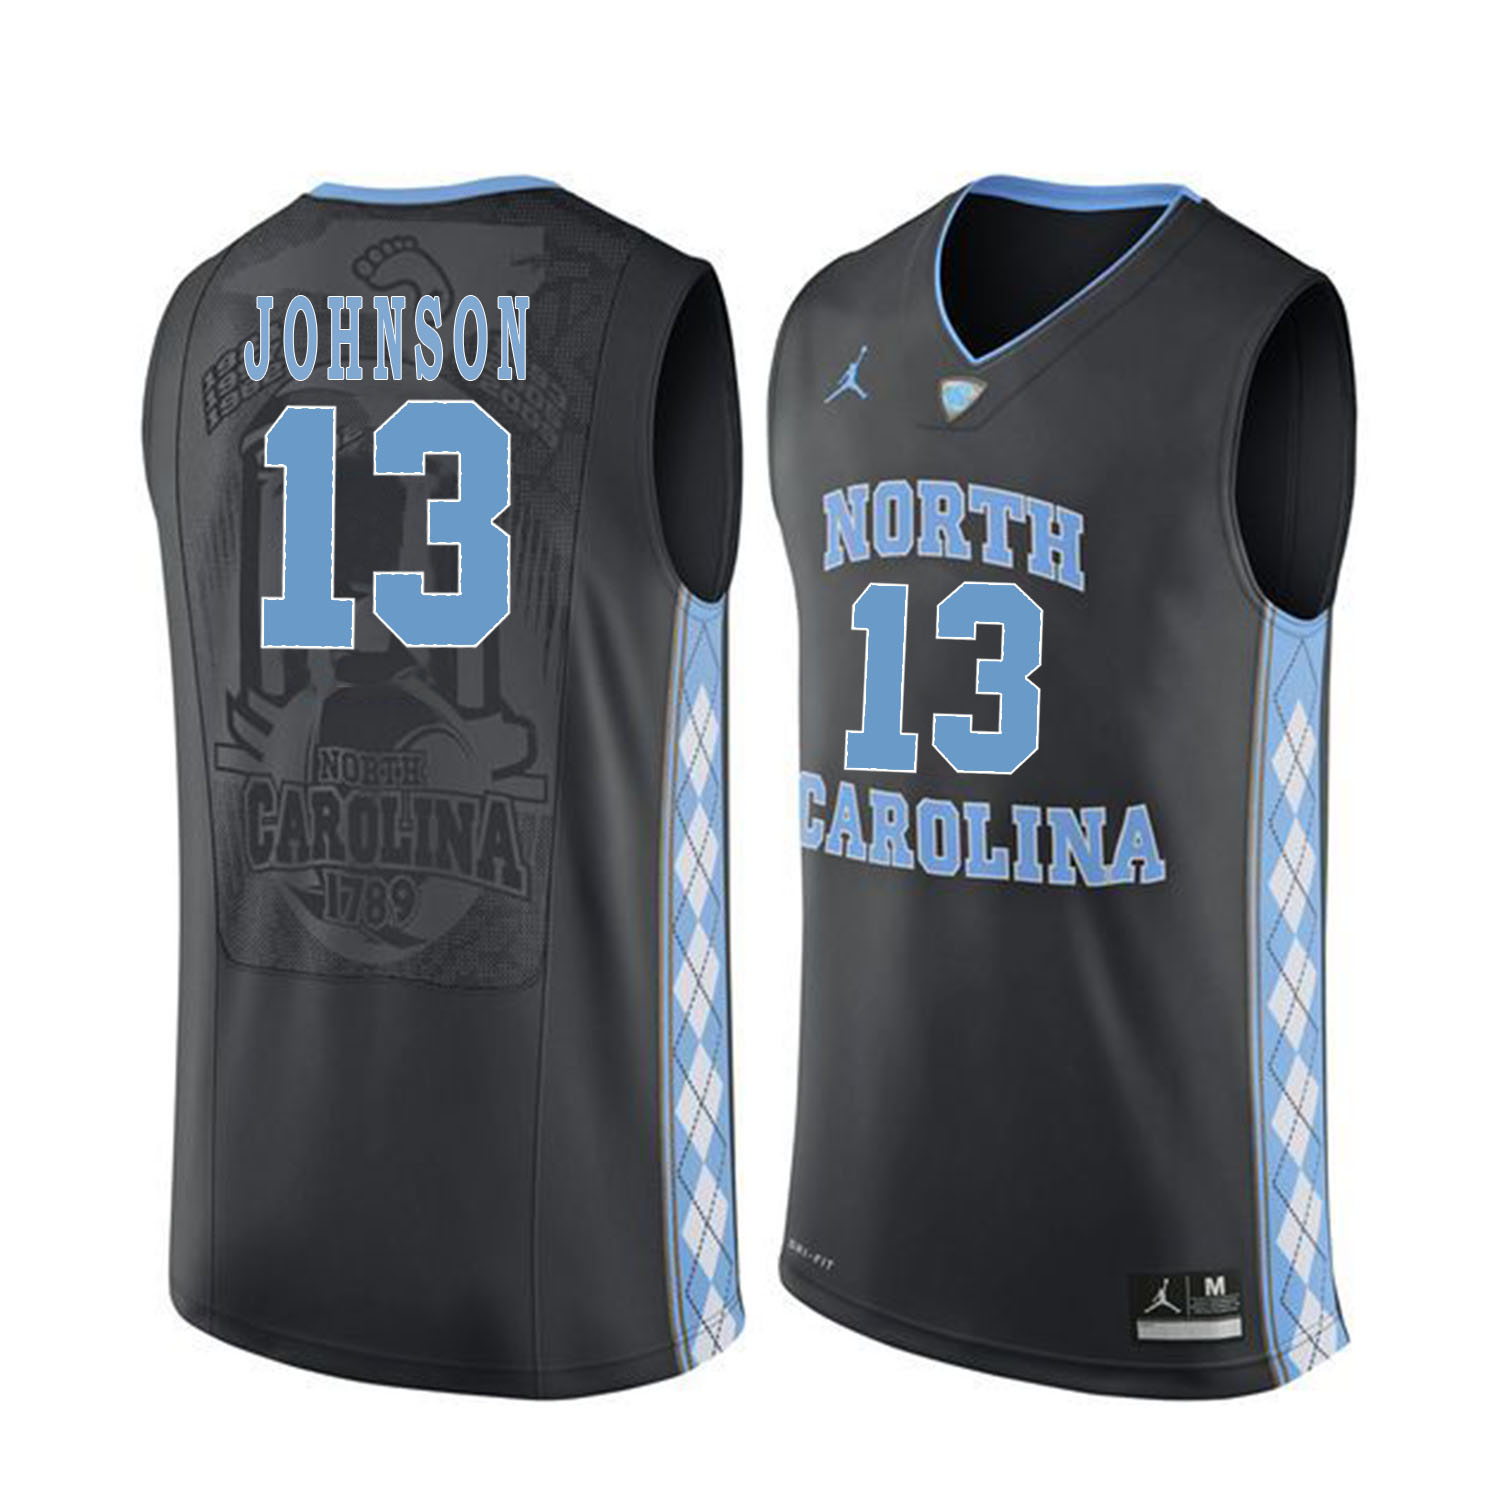 North Carolina Tar Heels 13 Cameron Johnson Black College Basketball Jersey